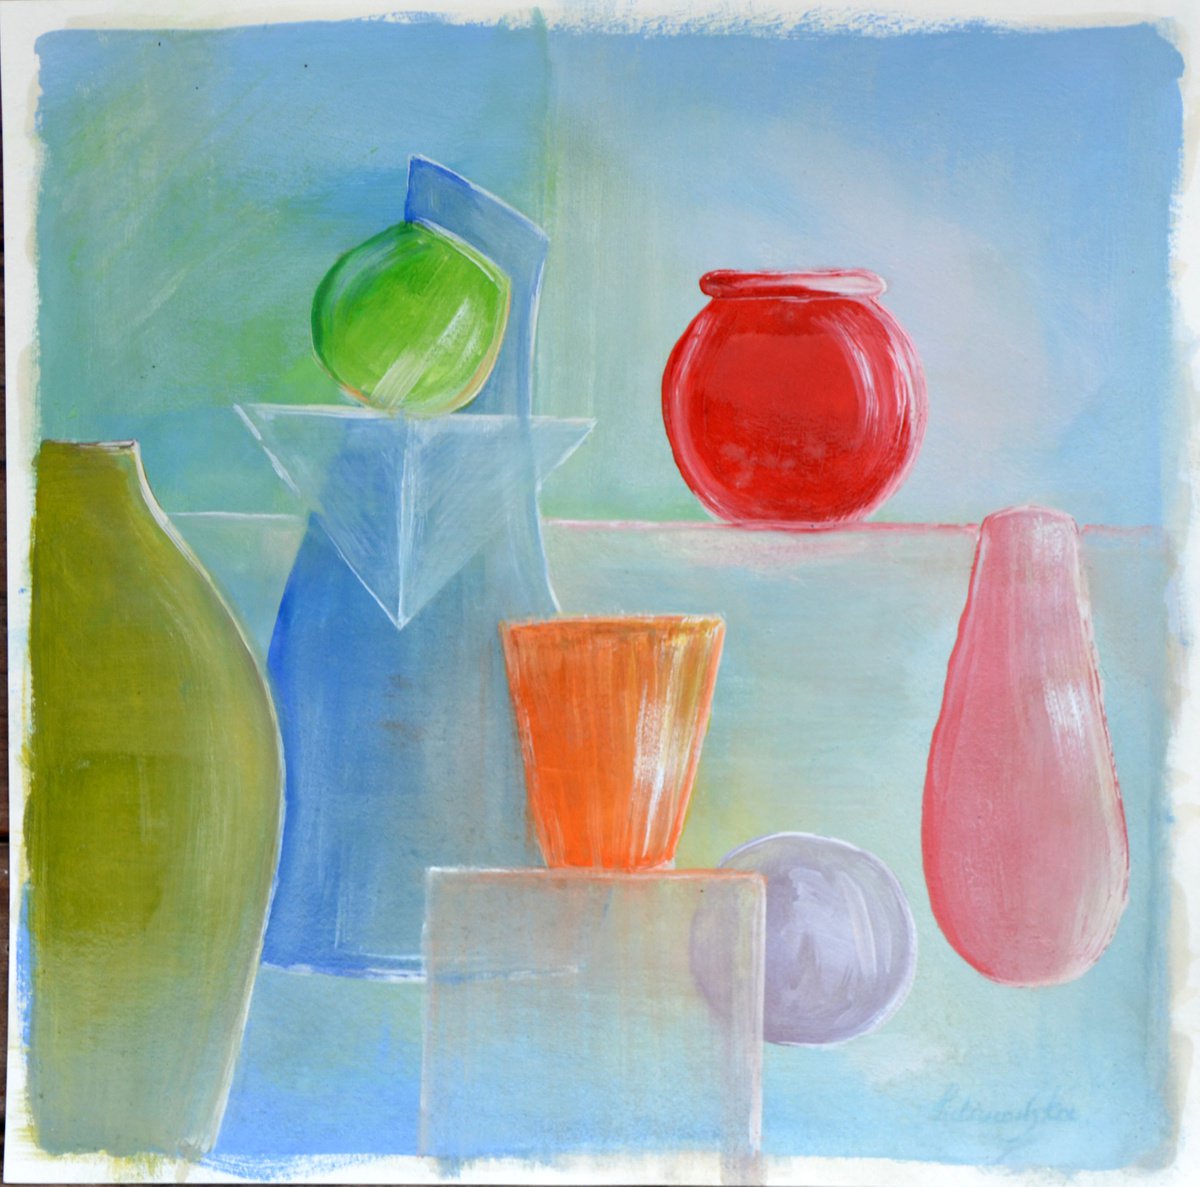 Coloured Glass by Maja Tulimowska - Chmielewska